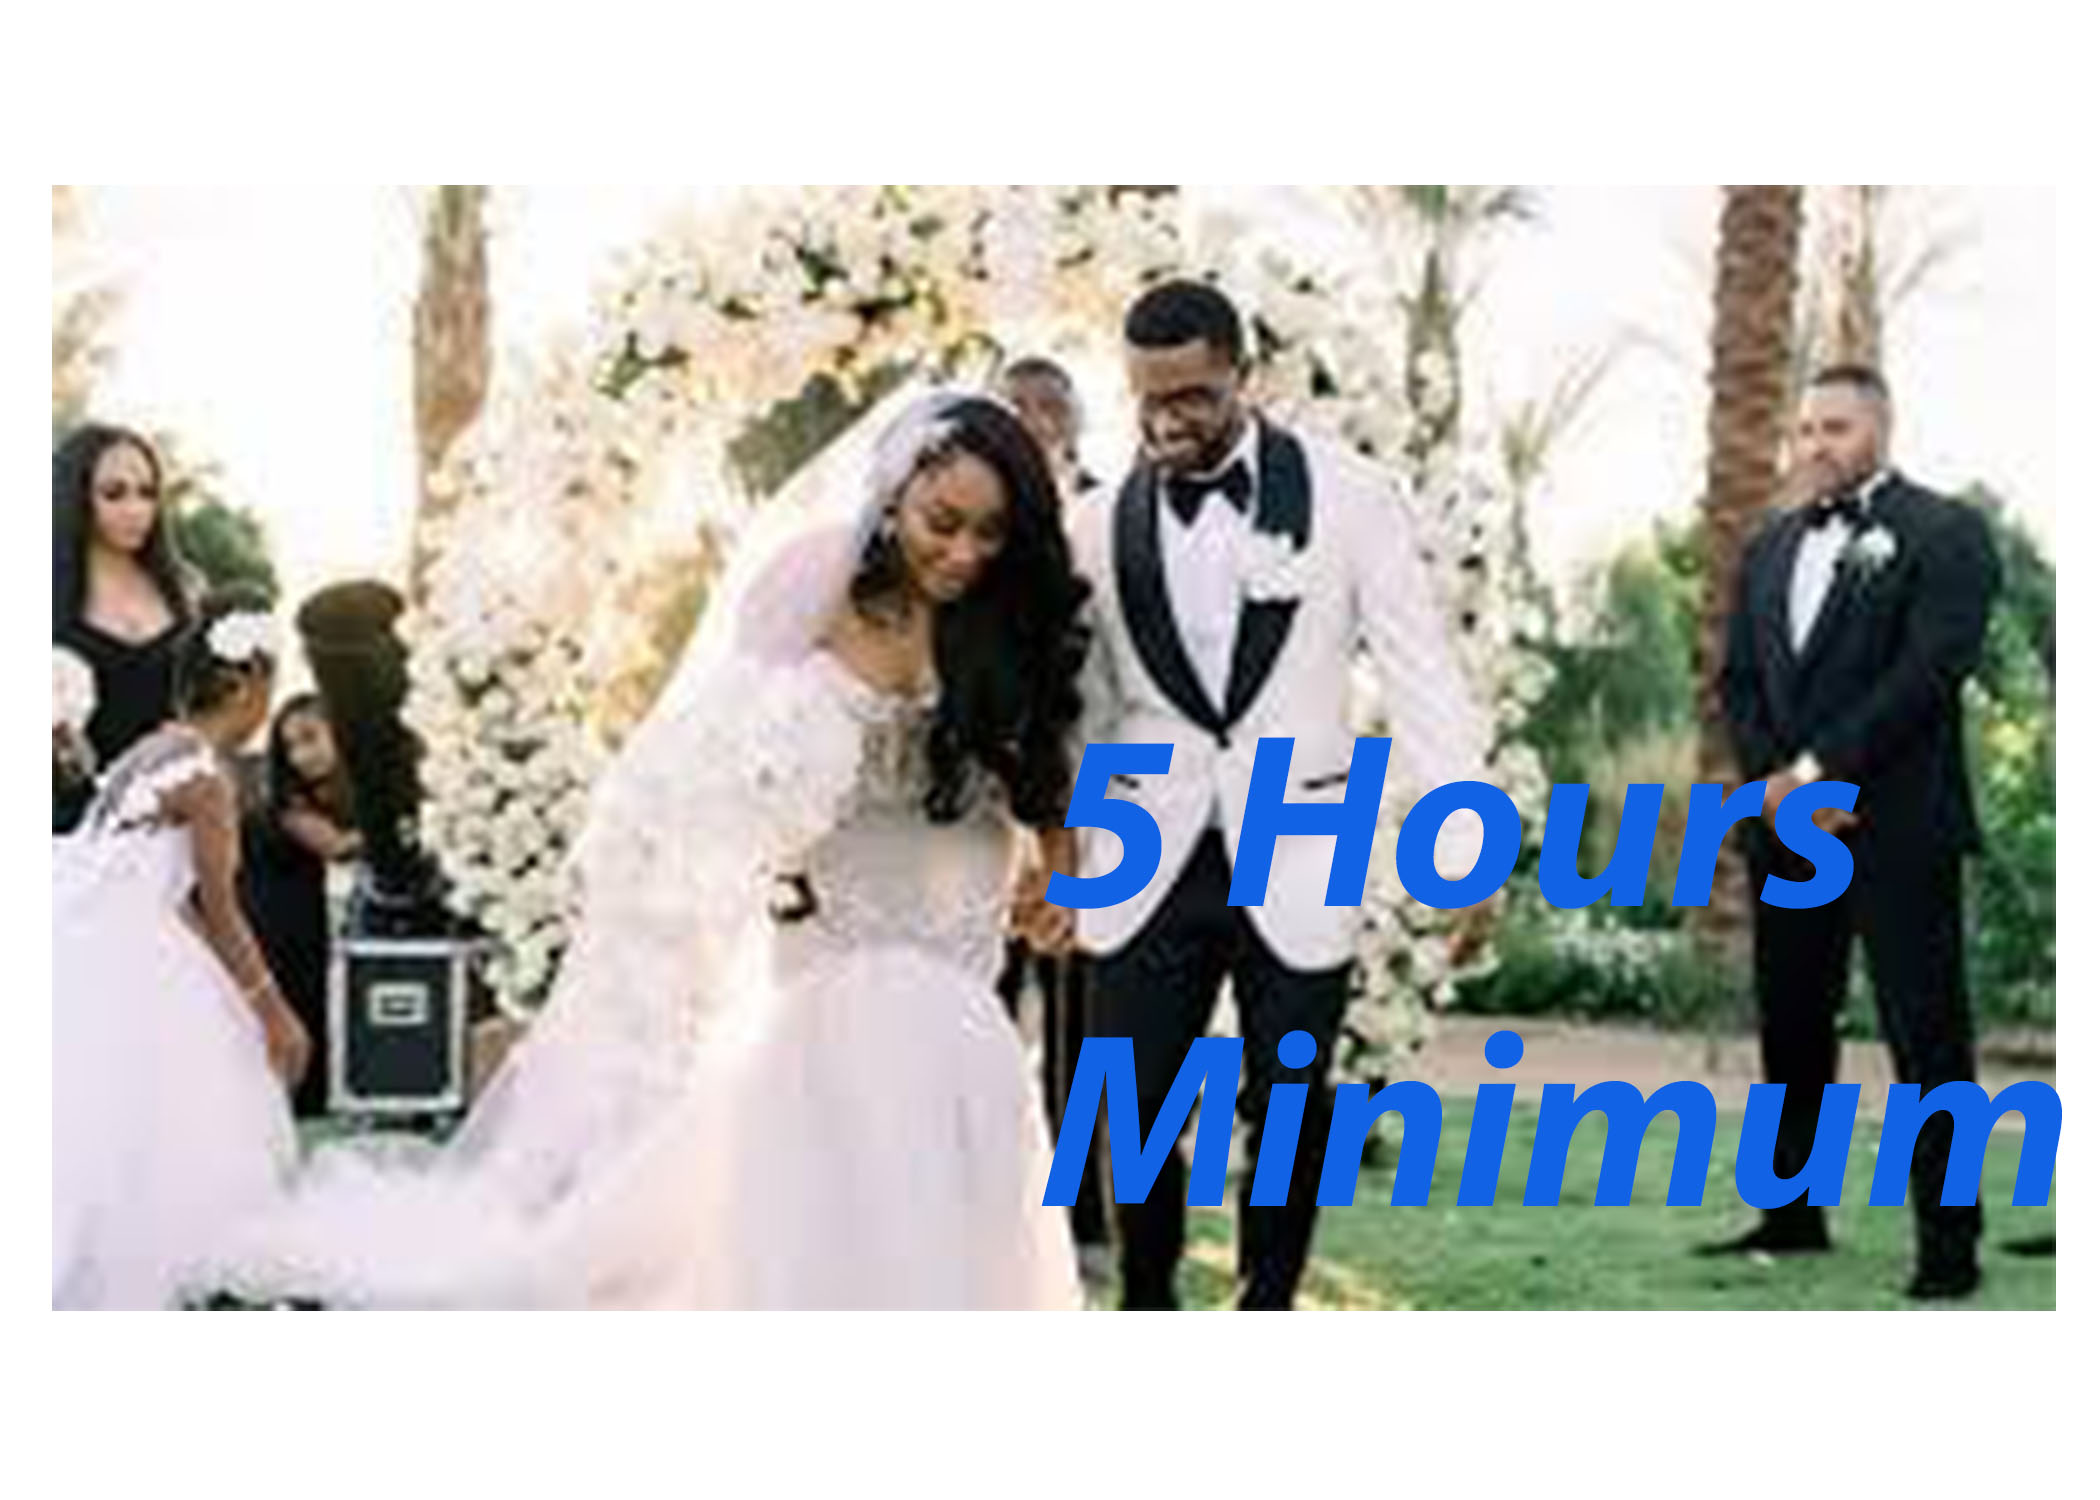 Wedding Escort Services (5 hrs minimum)